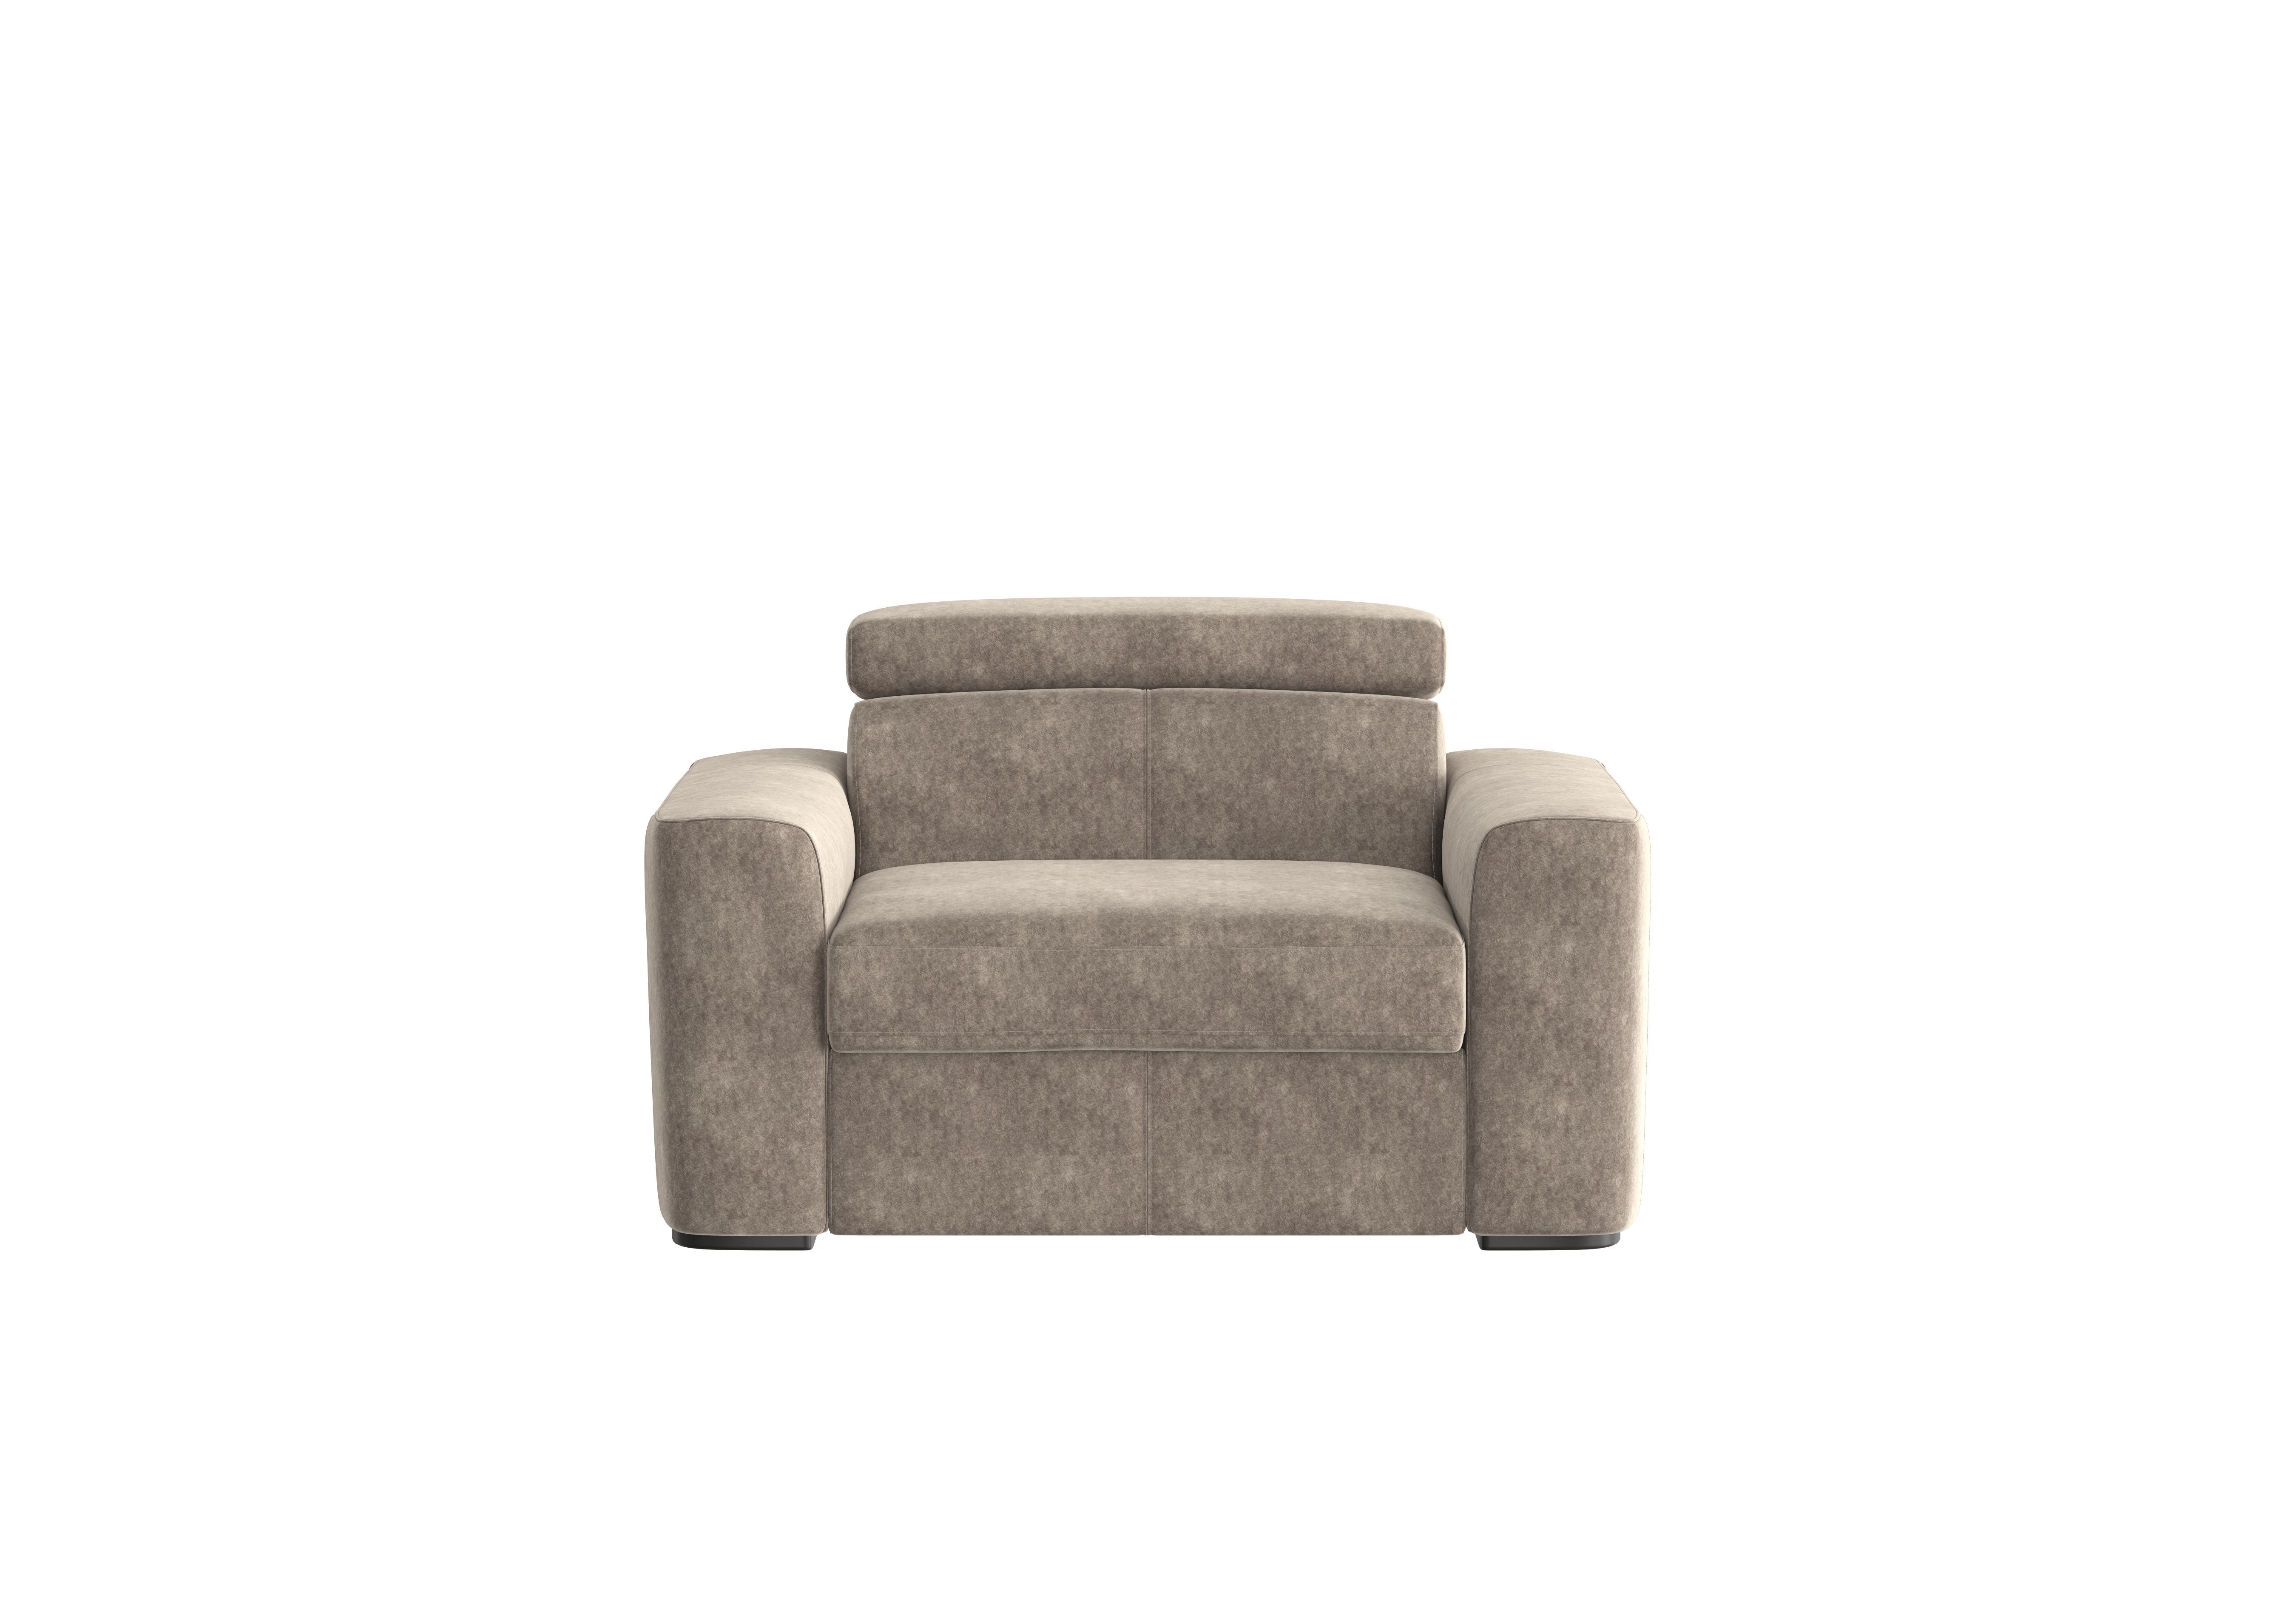 Infinity Fabric Chair Sofa Bed in Bfa-Bnn-R29 Fv1 Mink on Furniture Village